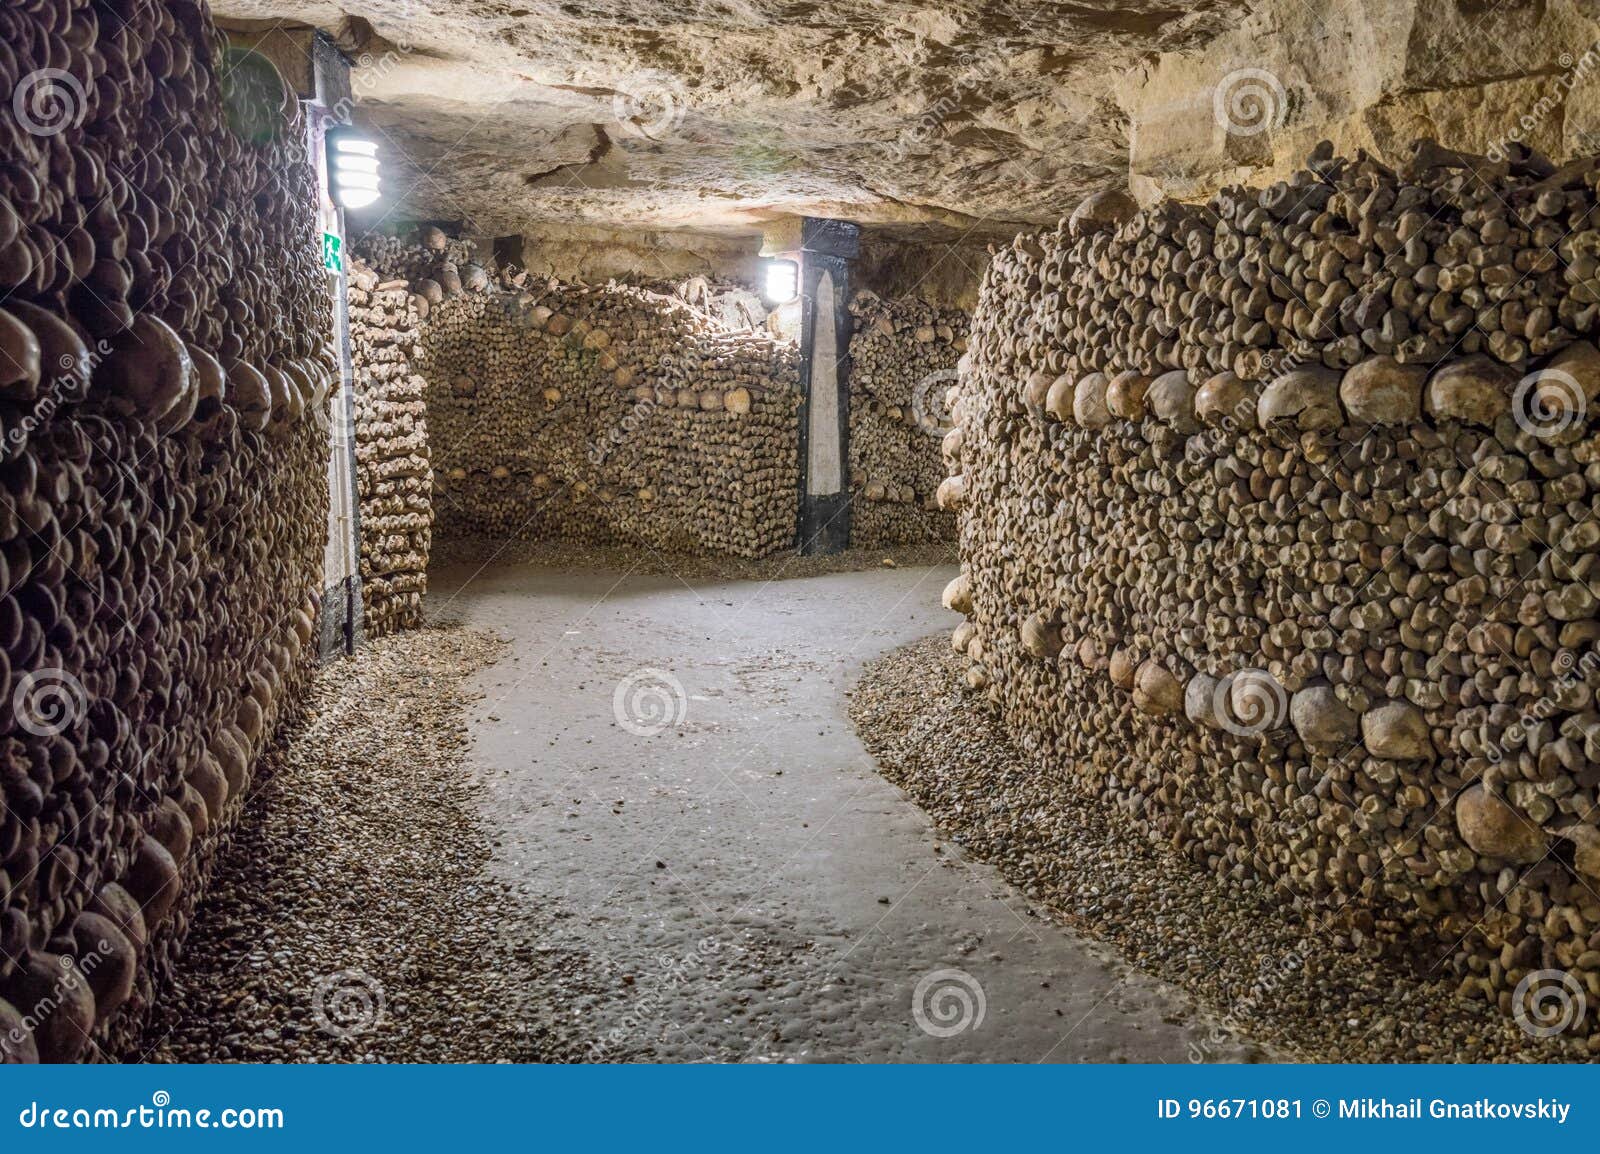 catacombs, tunnels, walls made of bones and skulls